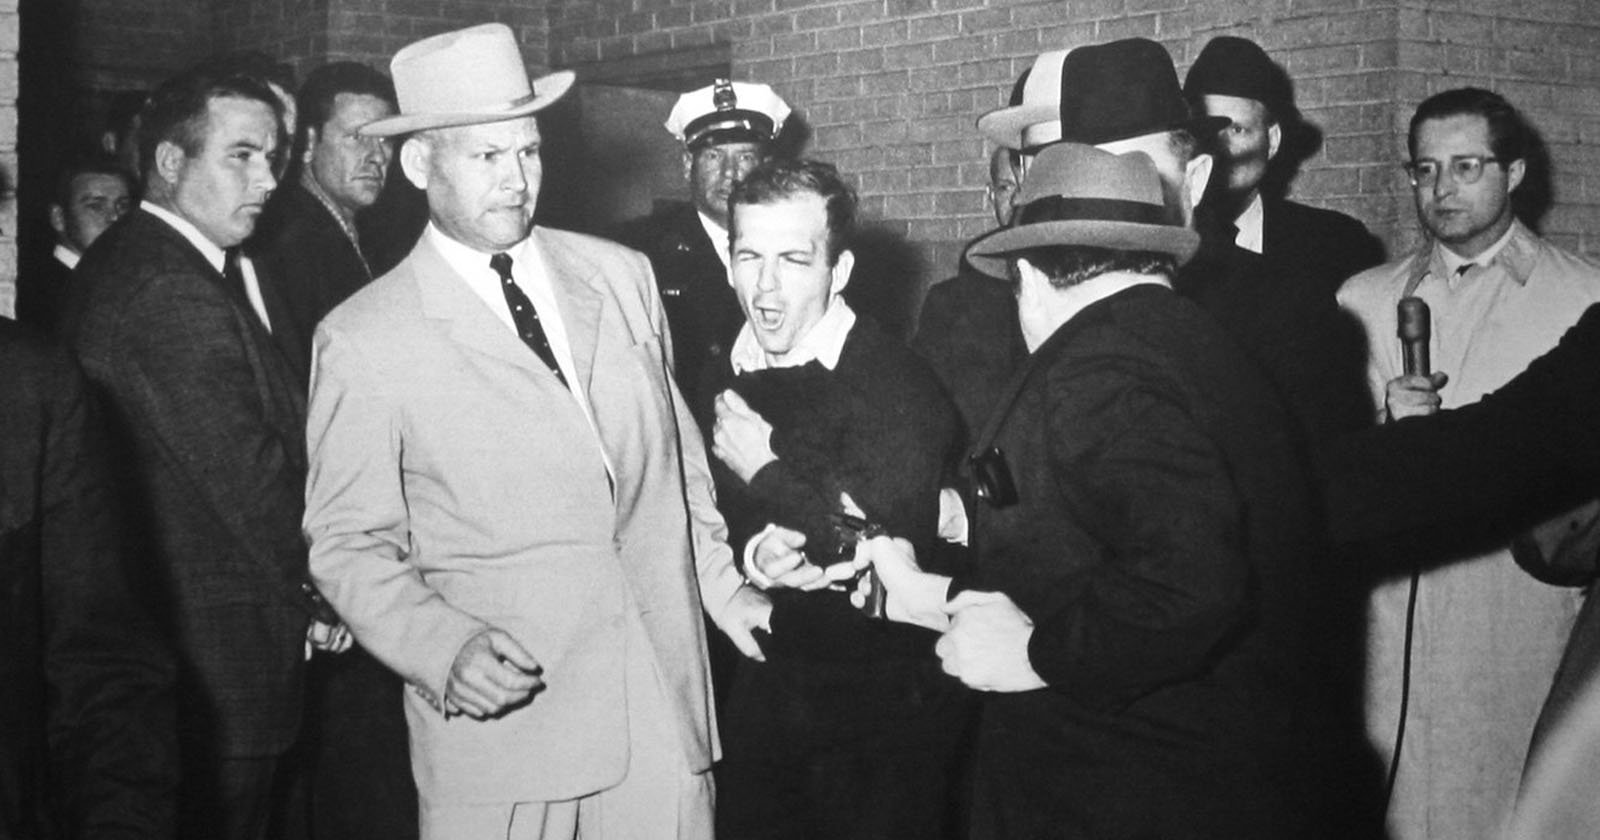 Photographer Who Captured Murder of Lee Harvey Oswald Recalls Turbulent Few Days